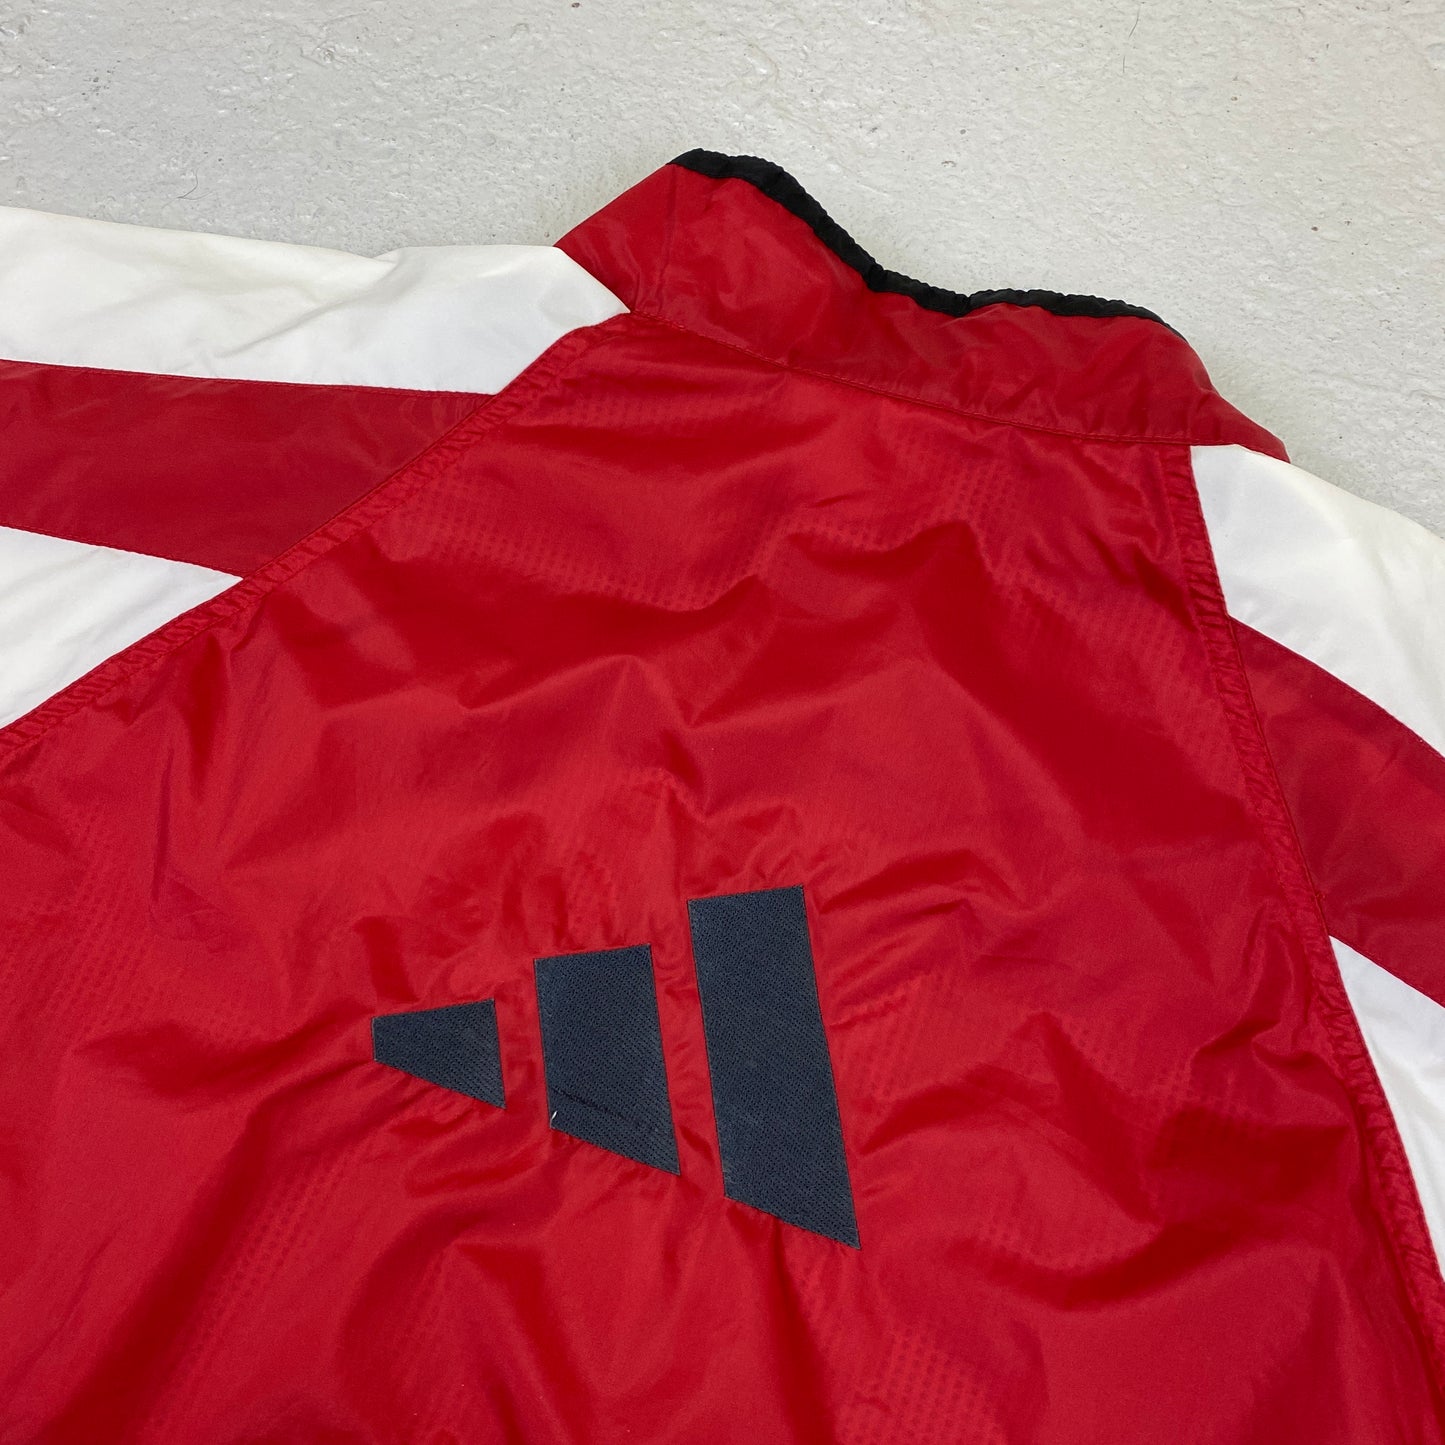 Adidas embroidered track jacket (XXL)